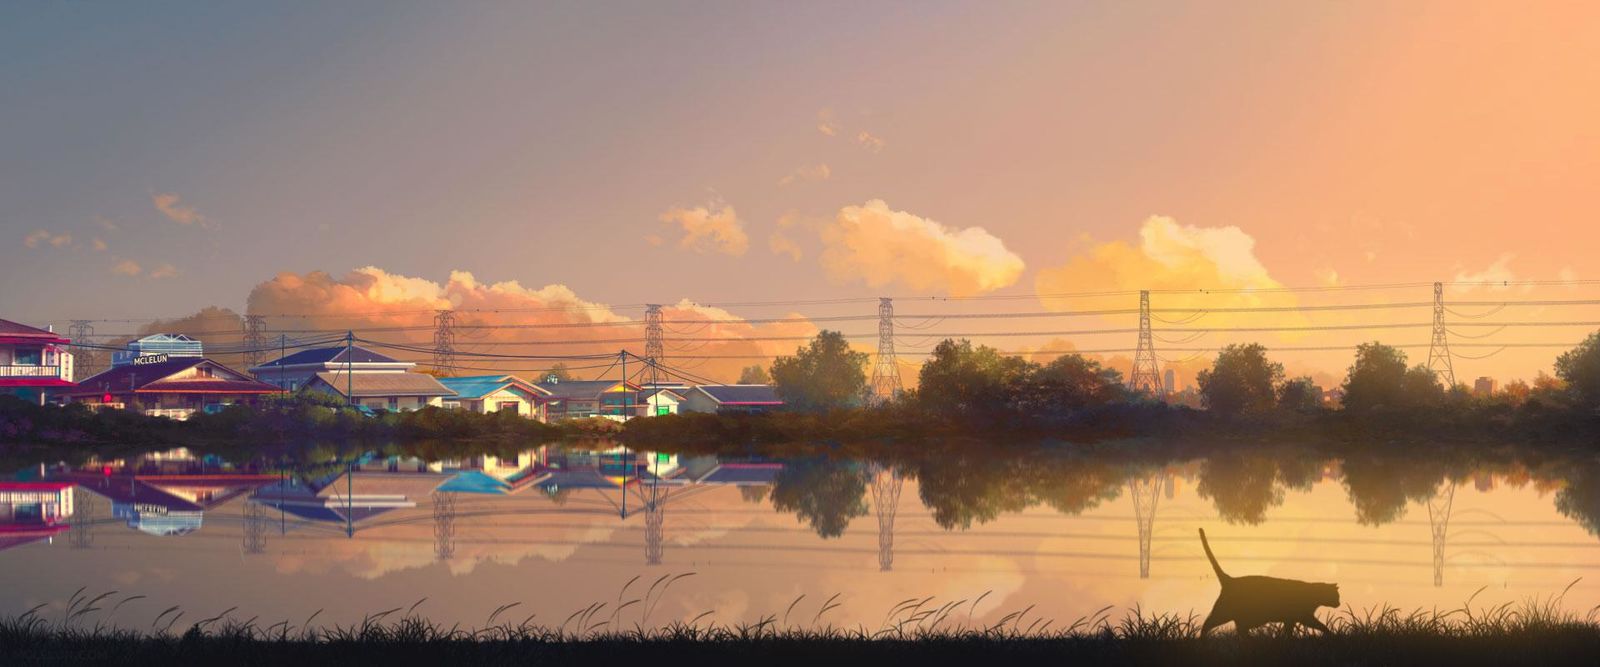 Sunset Lake插画图片壁纸